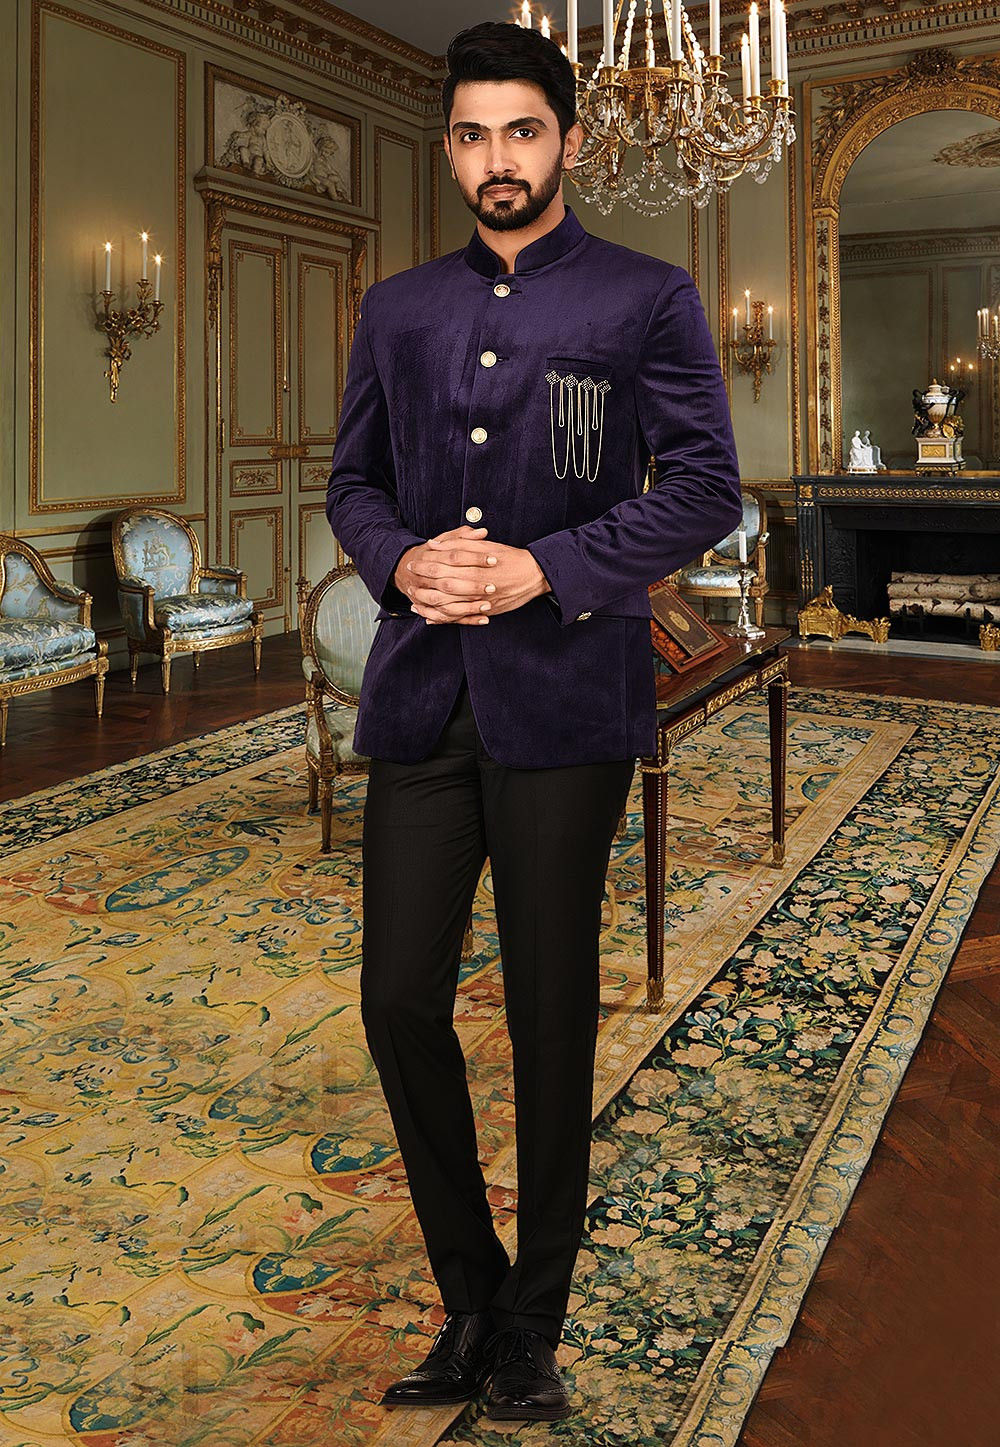 Premium Photo Pakistan Luxury Wedding Photoshoot In Prince Pant Coat ...